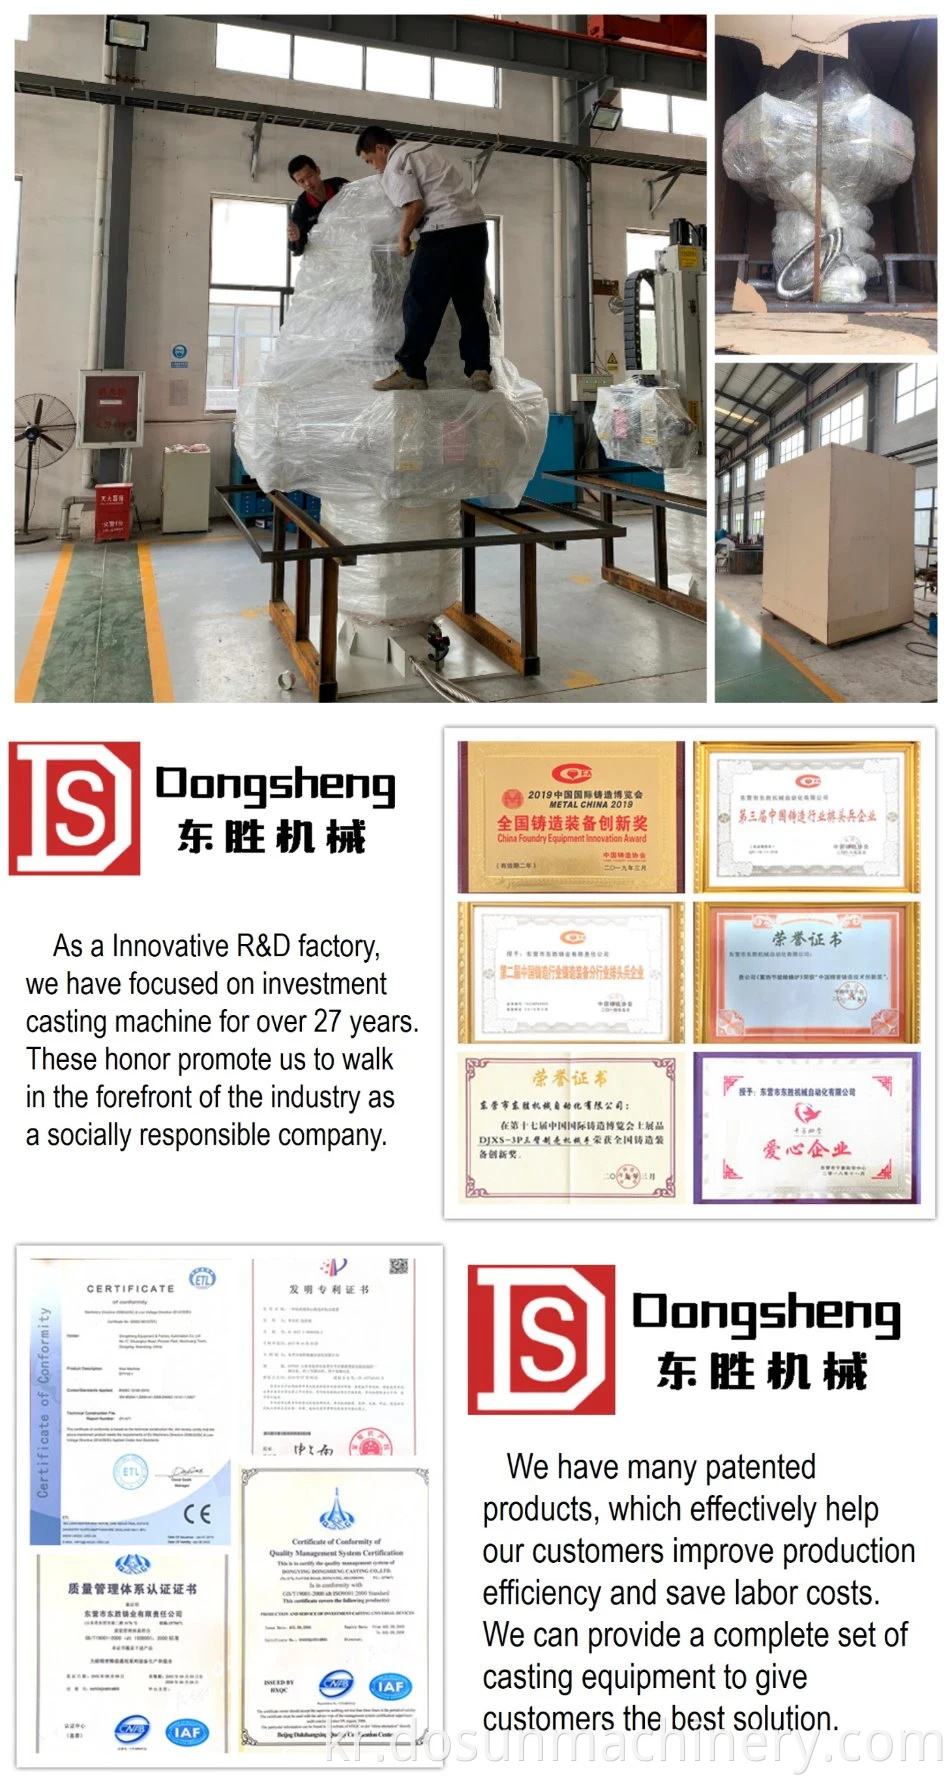 Dongsheng 재생 에너지 절약 ISO9001을위한 Dongsheng 재생 에너지 절약 로스터